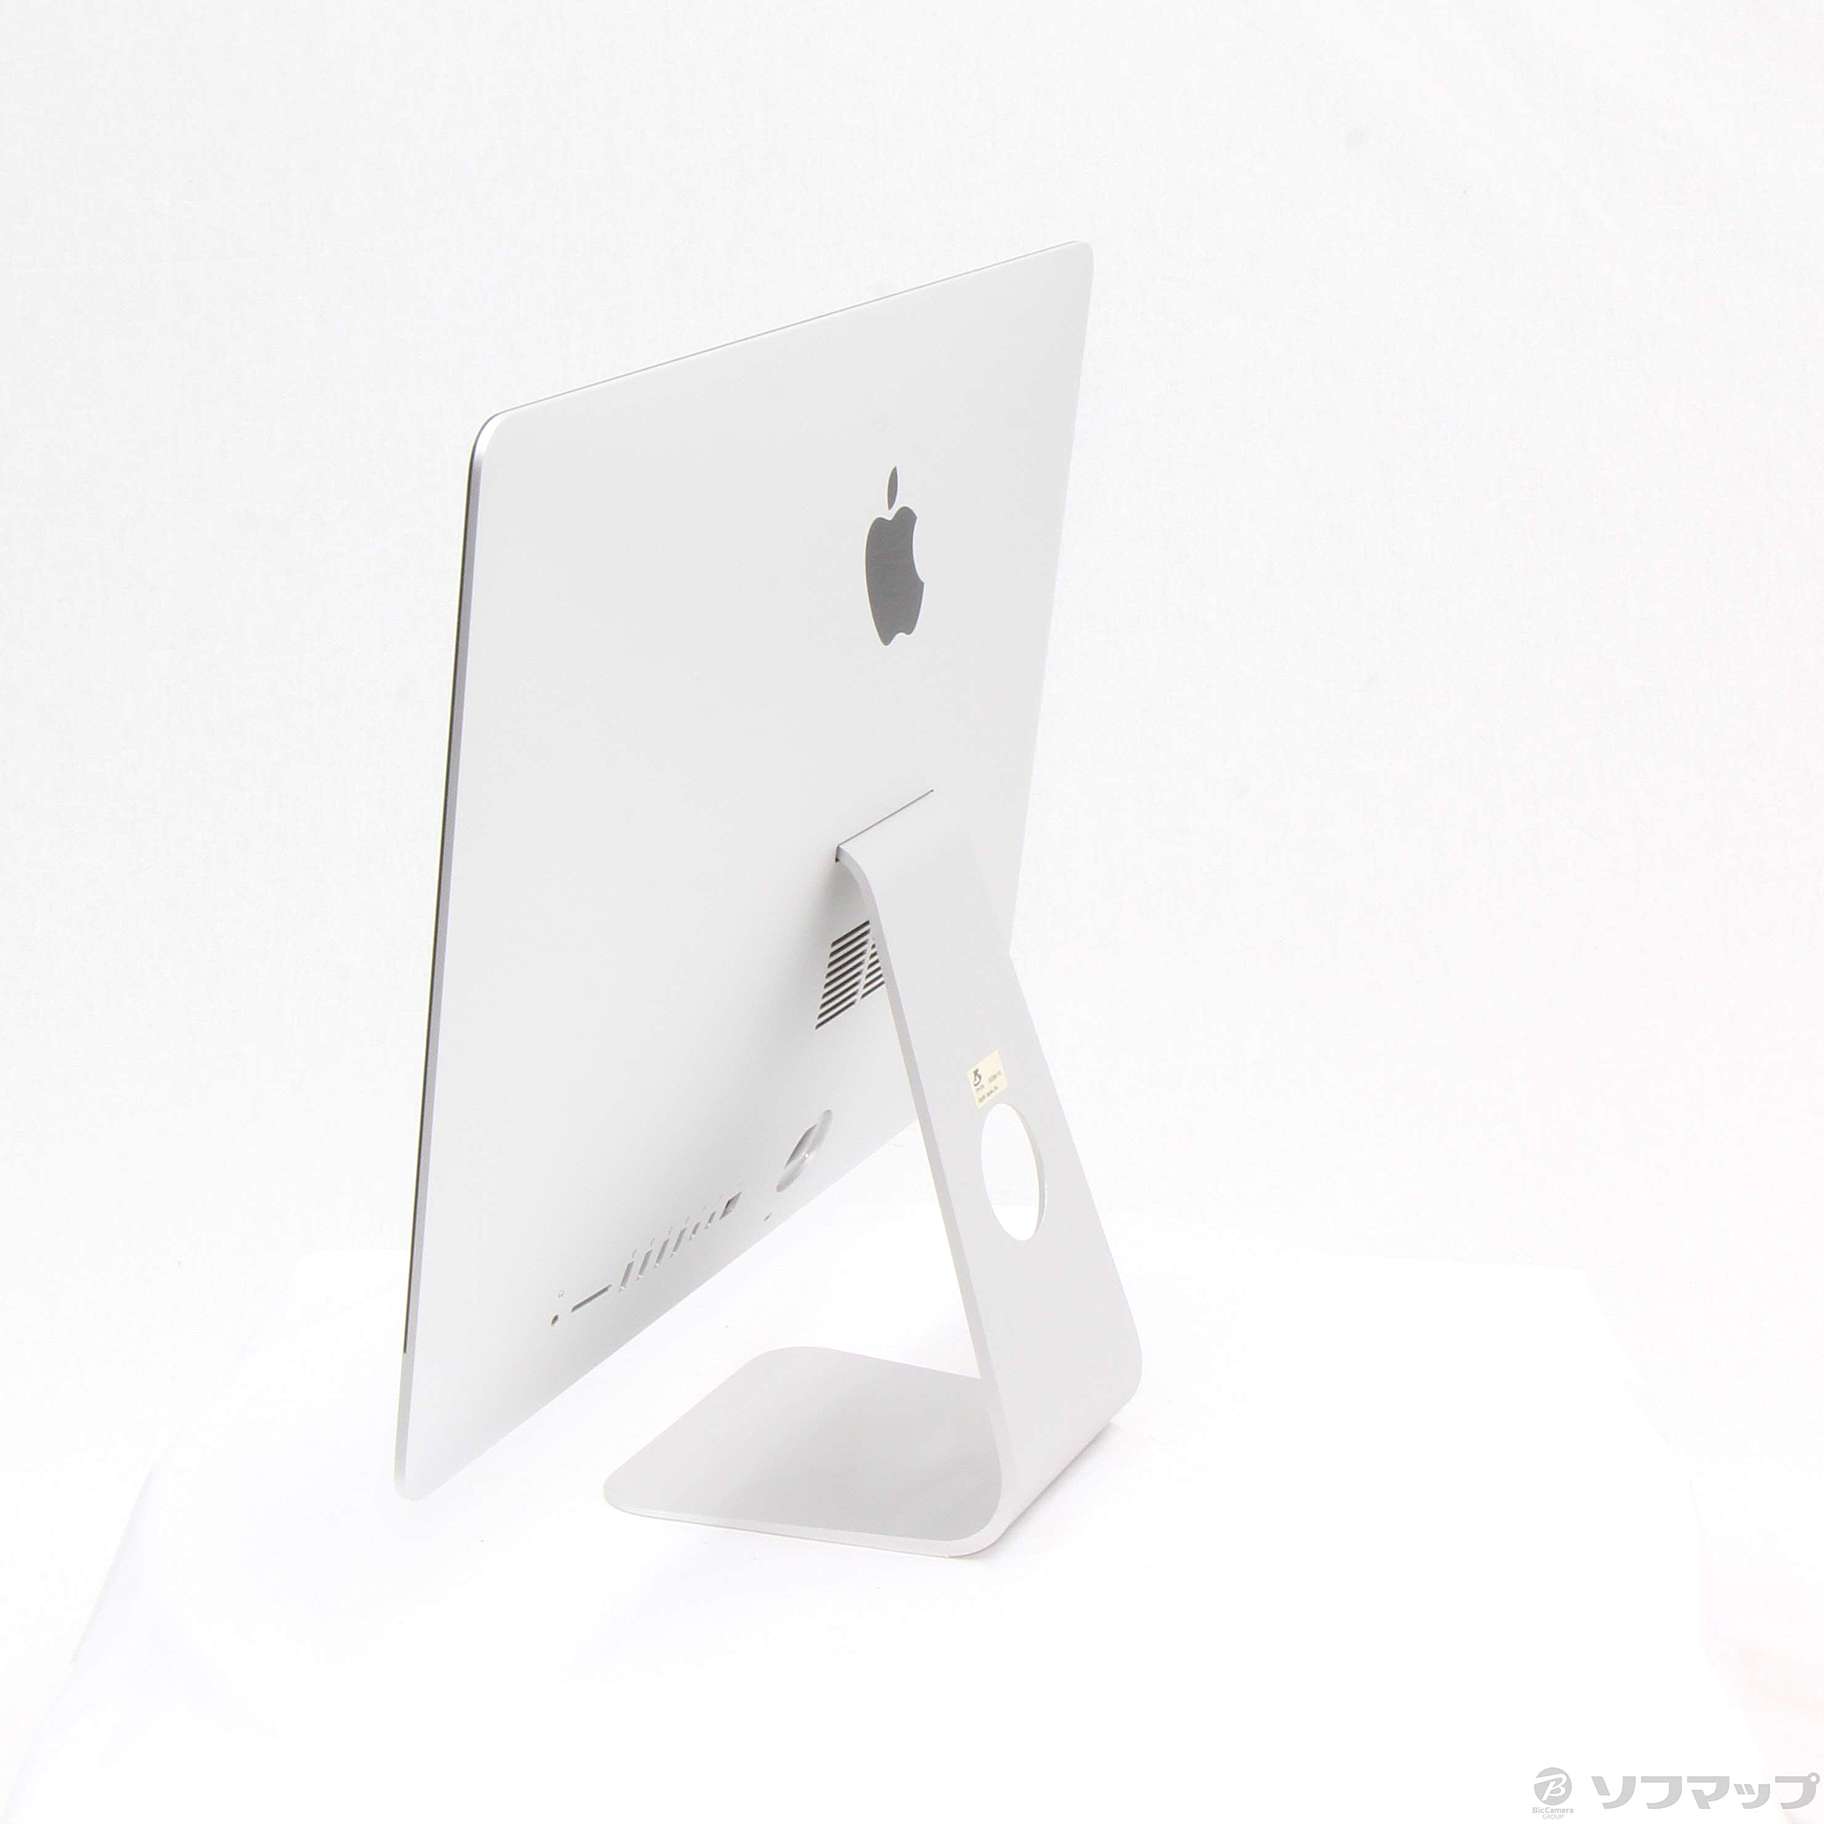 中古】iMac 21.5-inch Late 2013 ME086J／A Core_i5 2.7GHz 8GB HDD1TB